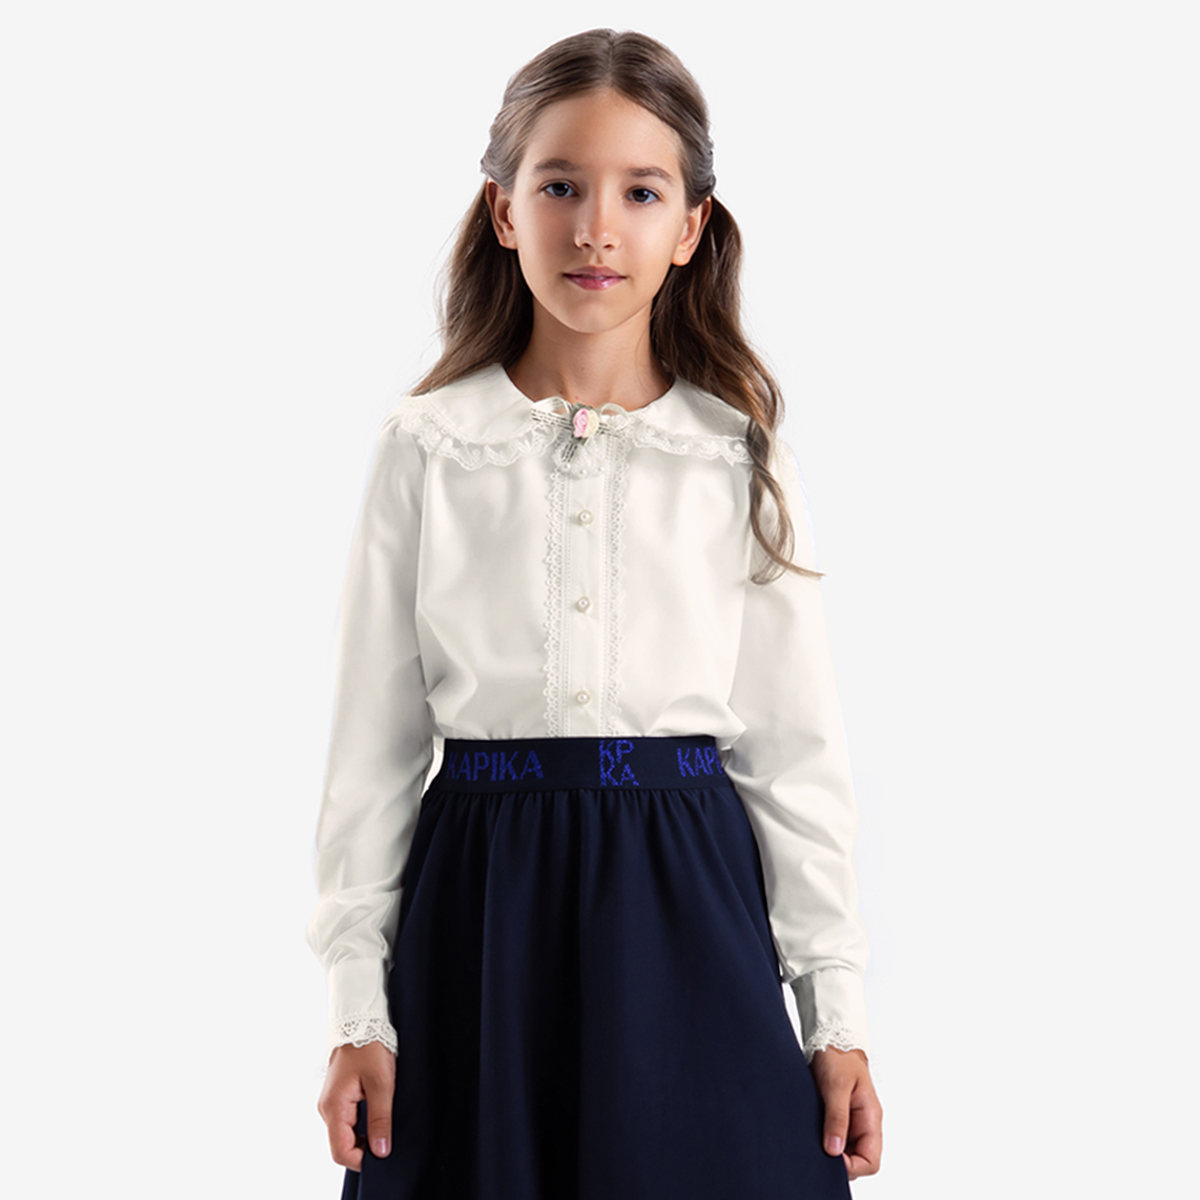 Блузка детская Kapika IJGCB01-02, цвет экрю, размер 158 блузка детская gulliver 12302gmc2203 белый размер 104